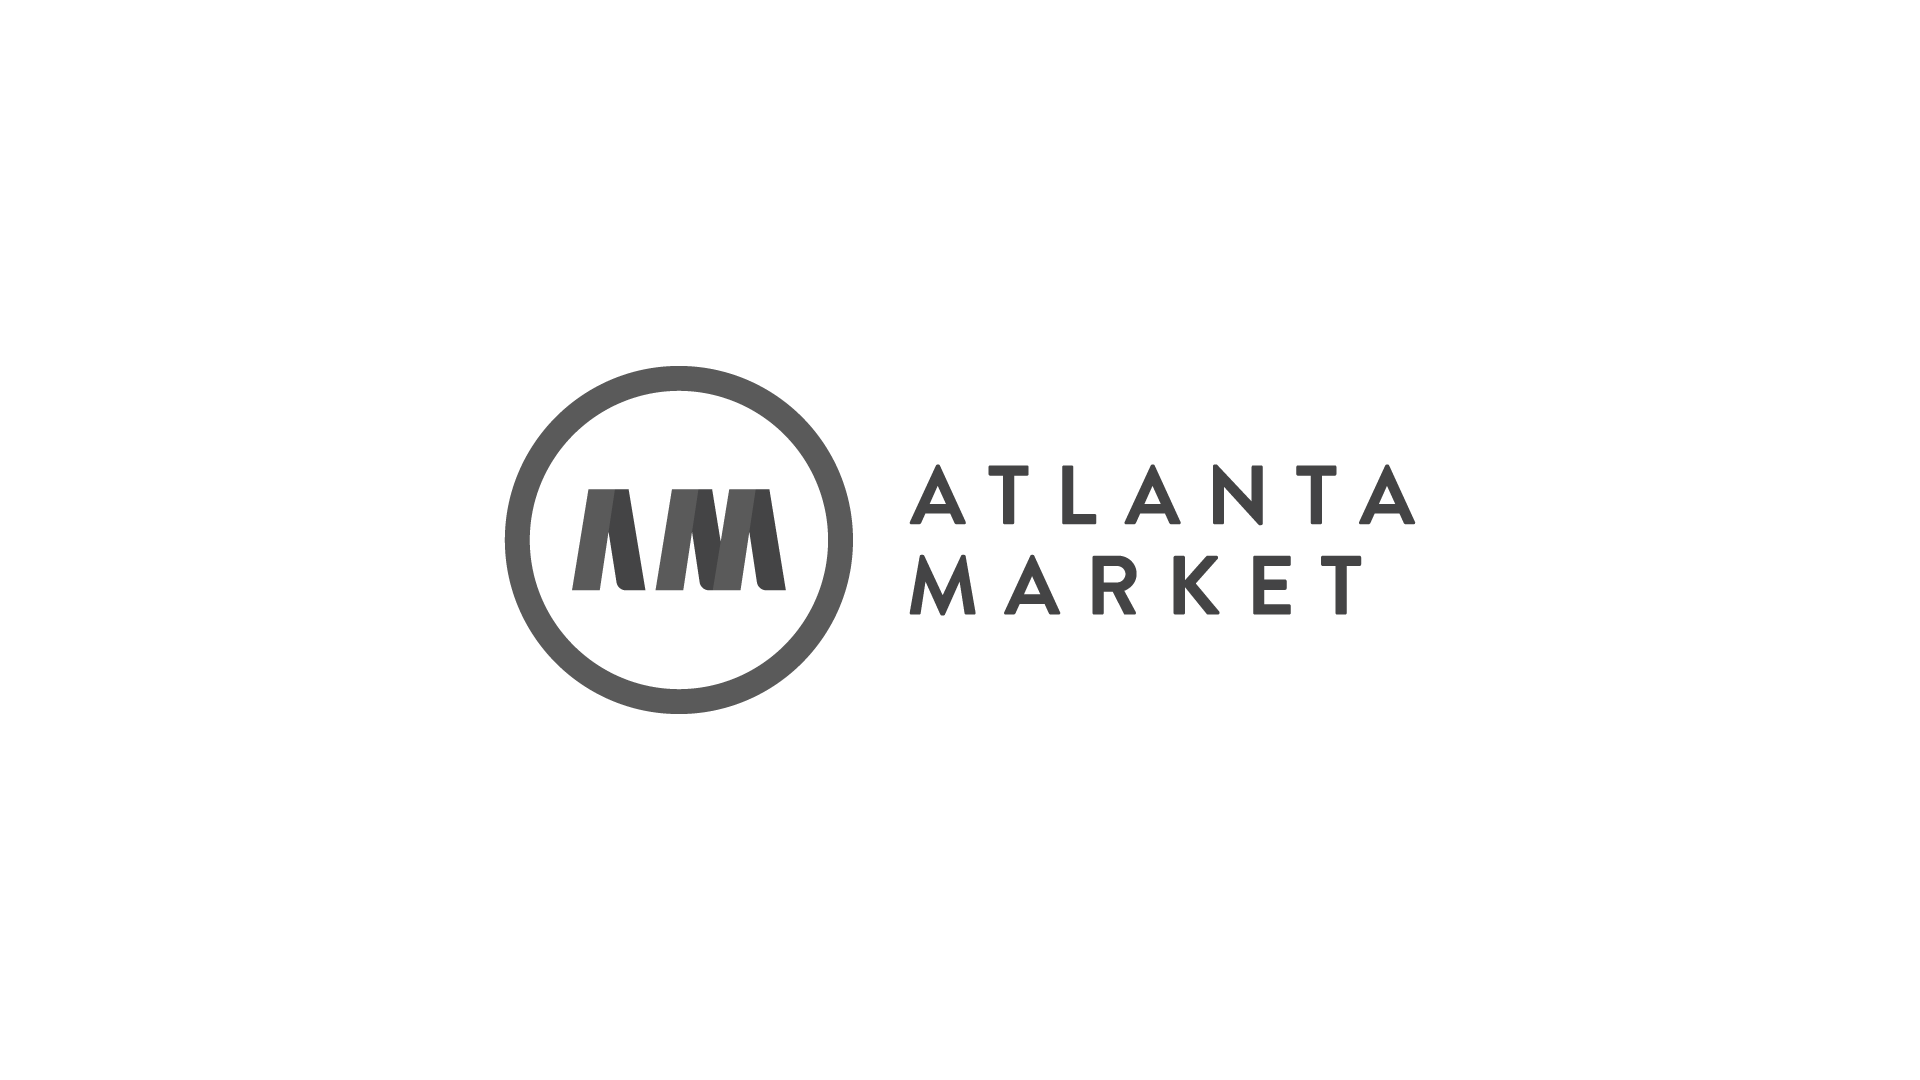 Atlanta Market - Dark Greyscale Logo